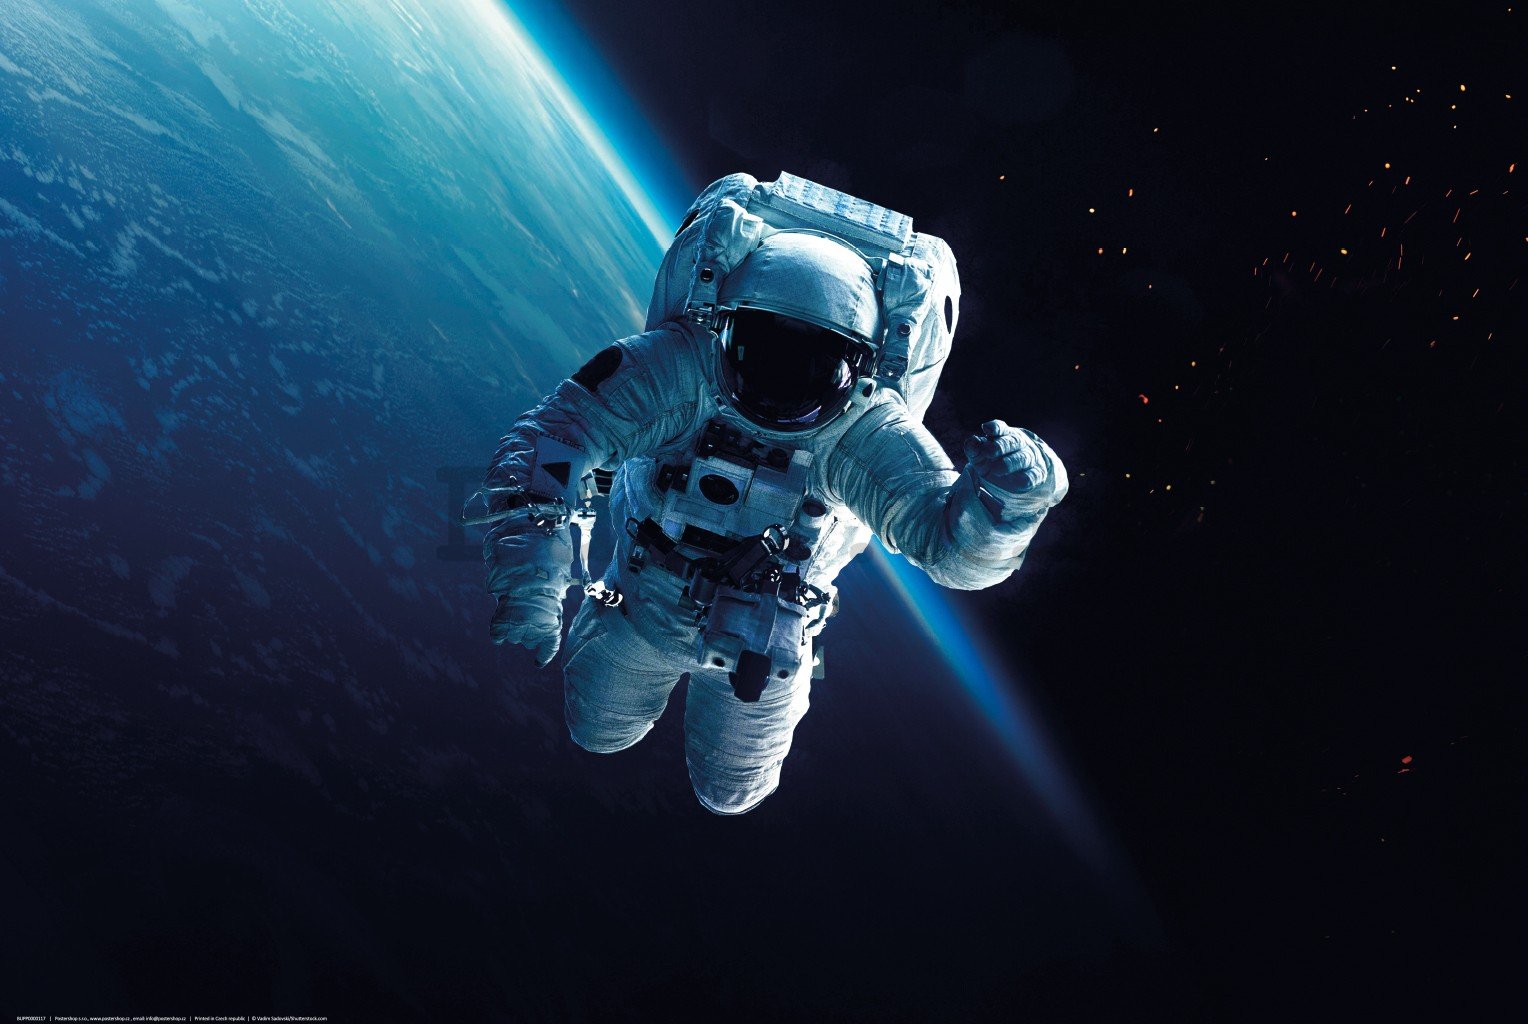 Poster: Astronaut u svemiru